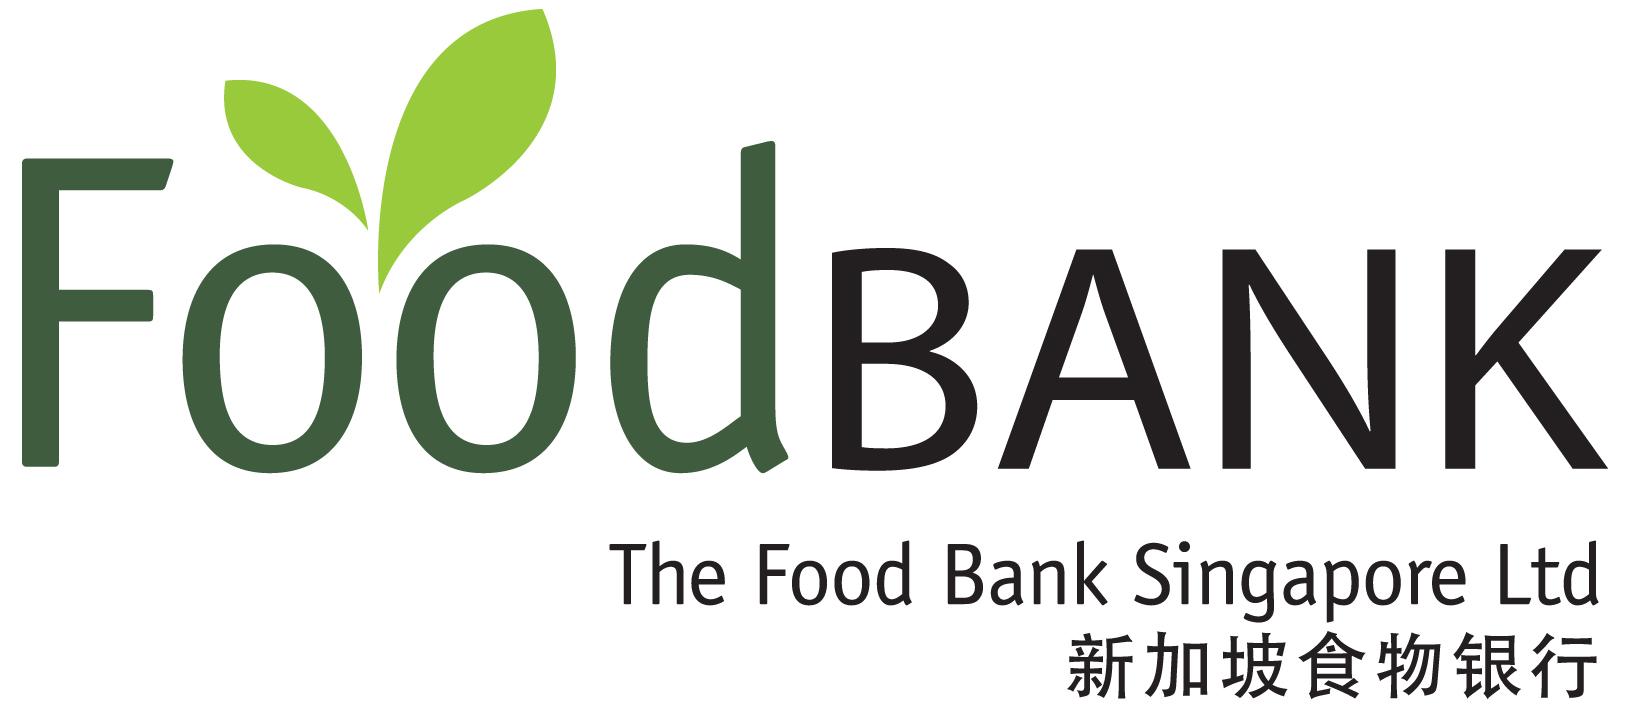 The Food Bank Singapore Ltd. logo